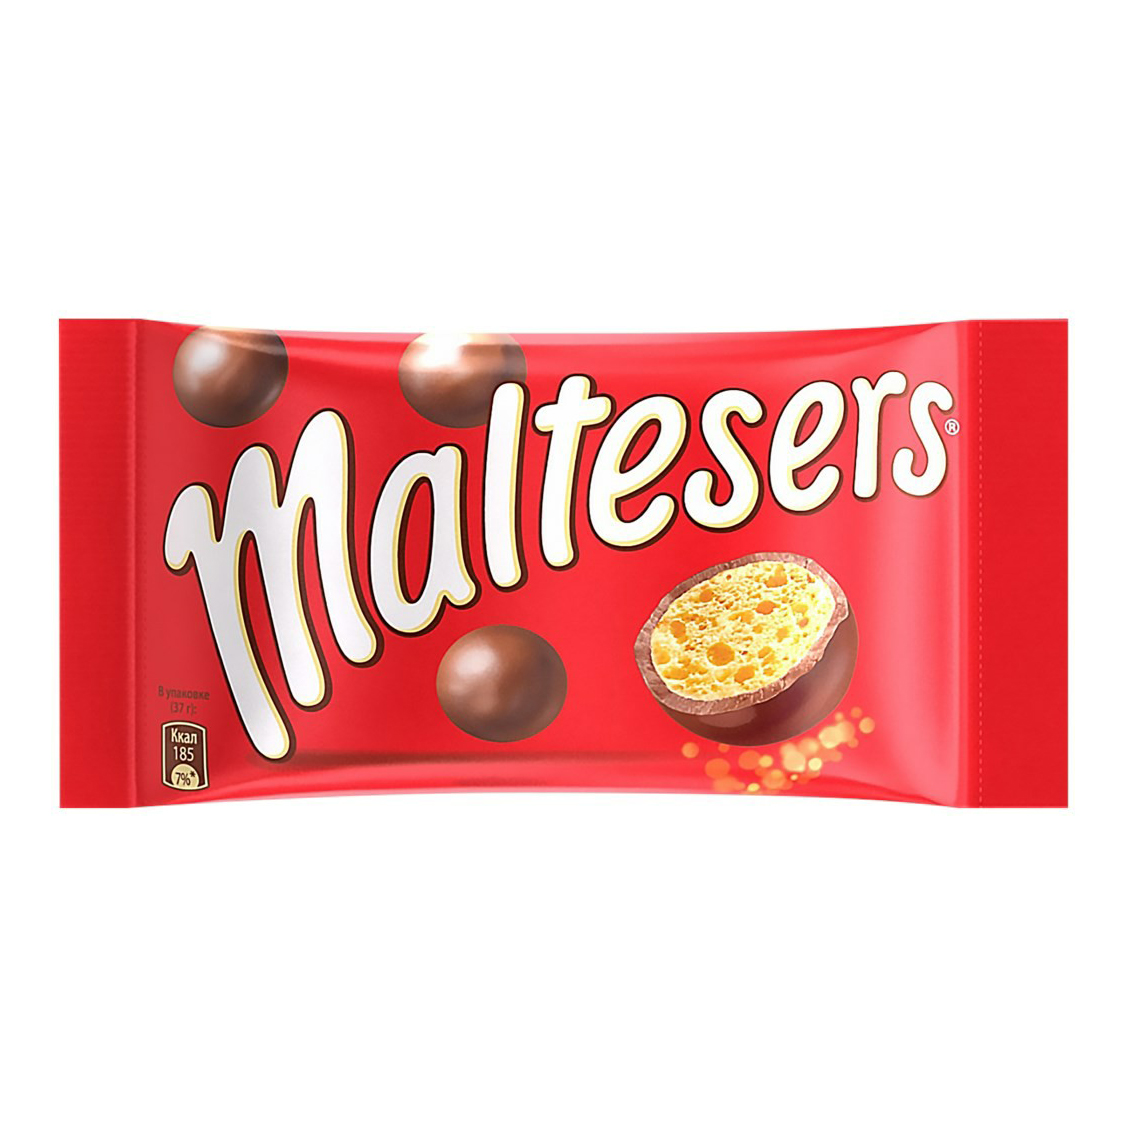 Хрустящие шоколадные шарики. Конфеты шоколадные шарики Мальтизерс. Maltesers Teasers конфеты. Воздушные шоколадные шарики ma. Шоколадные шарики Maltesers.